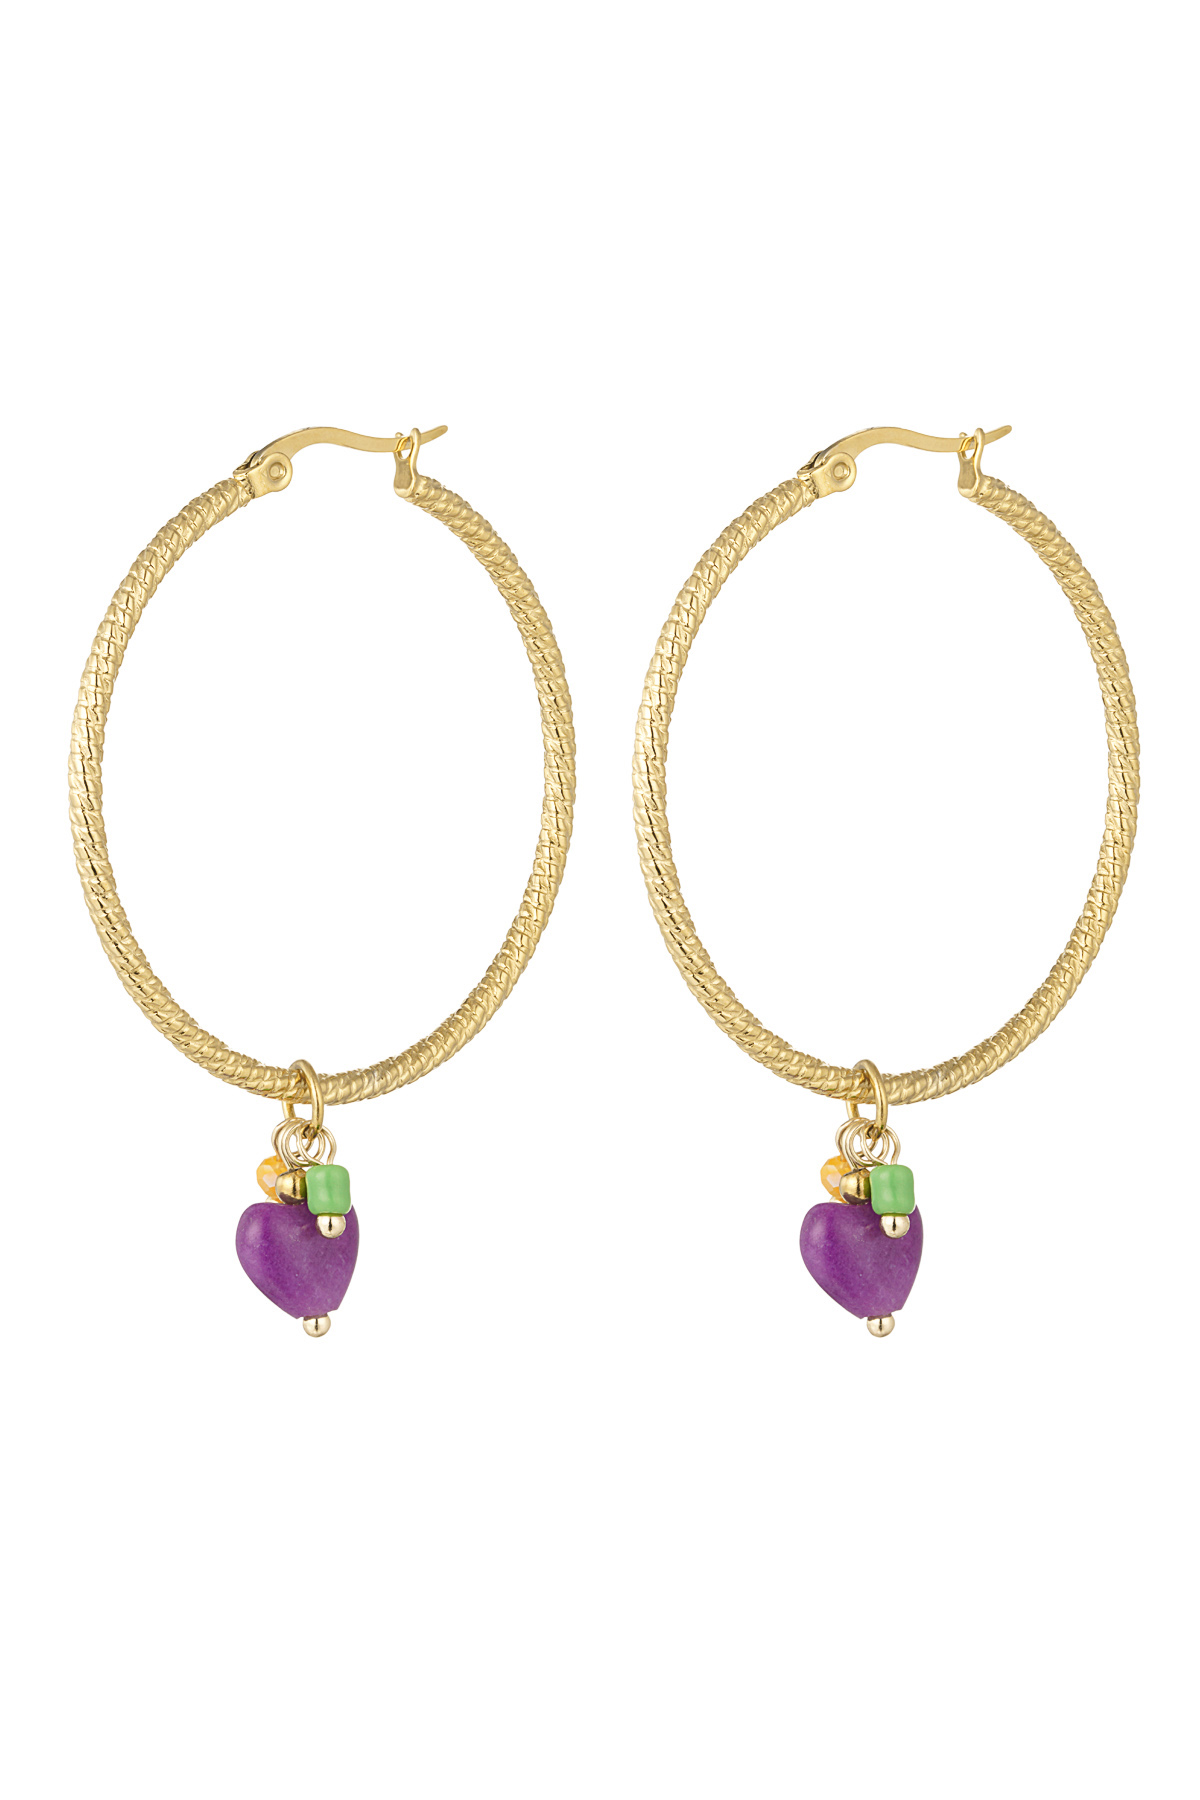 Earrings natural stone purple heart - gold 